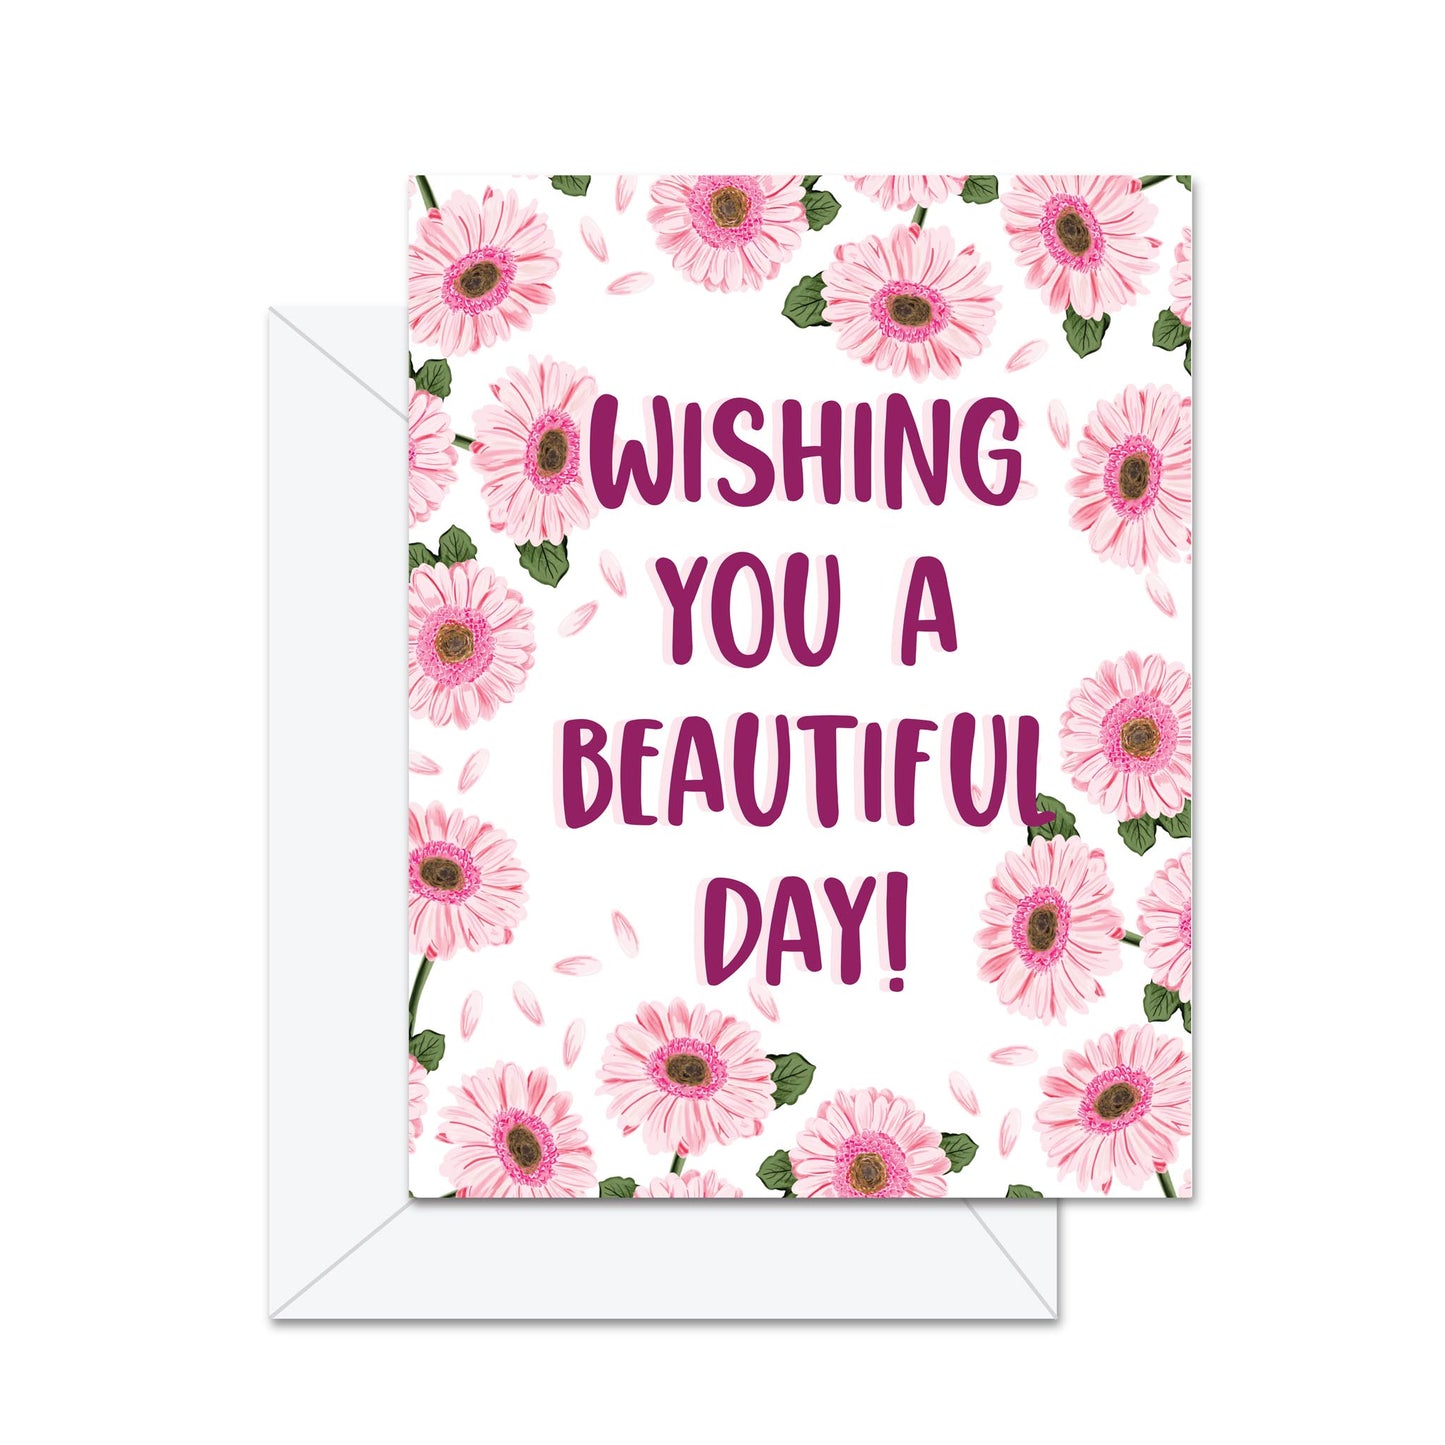 Wishing You A Beautiful Day! - Greeting Card